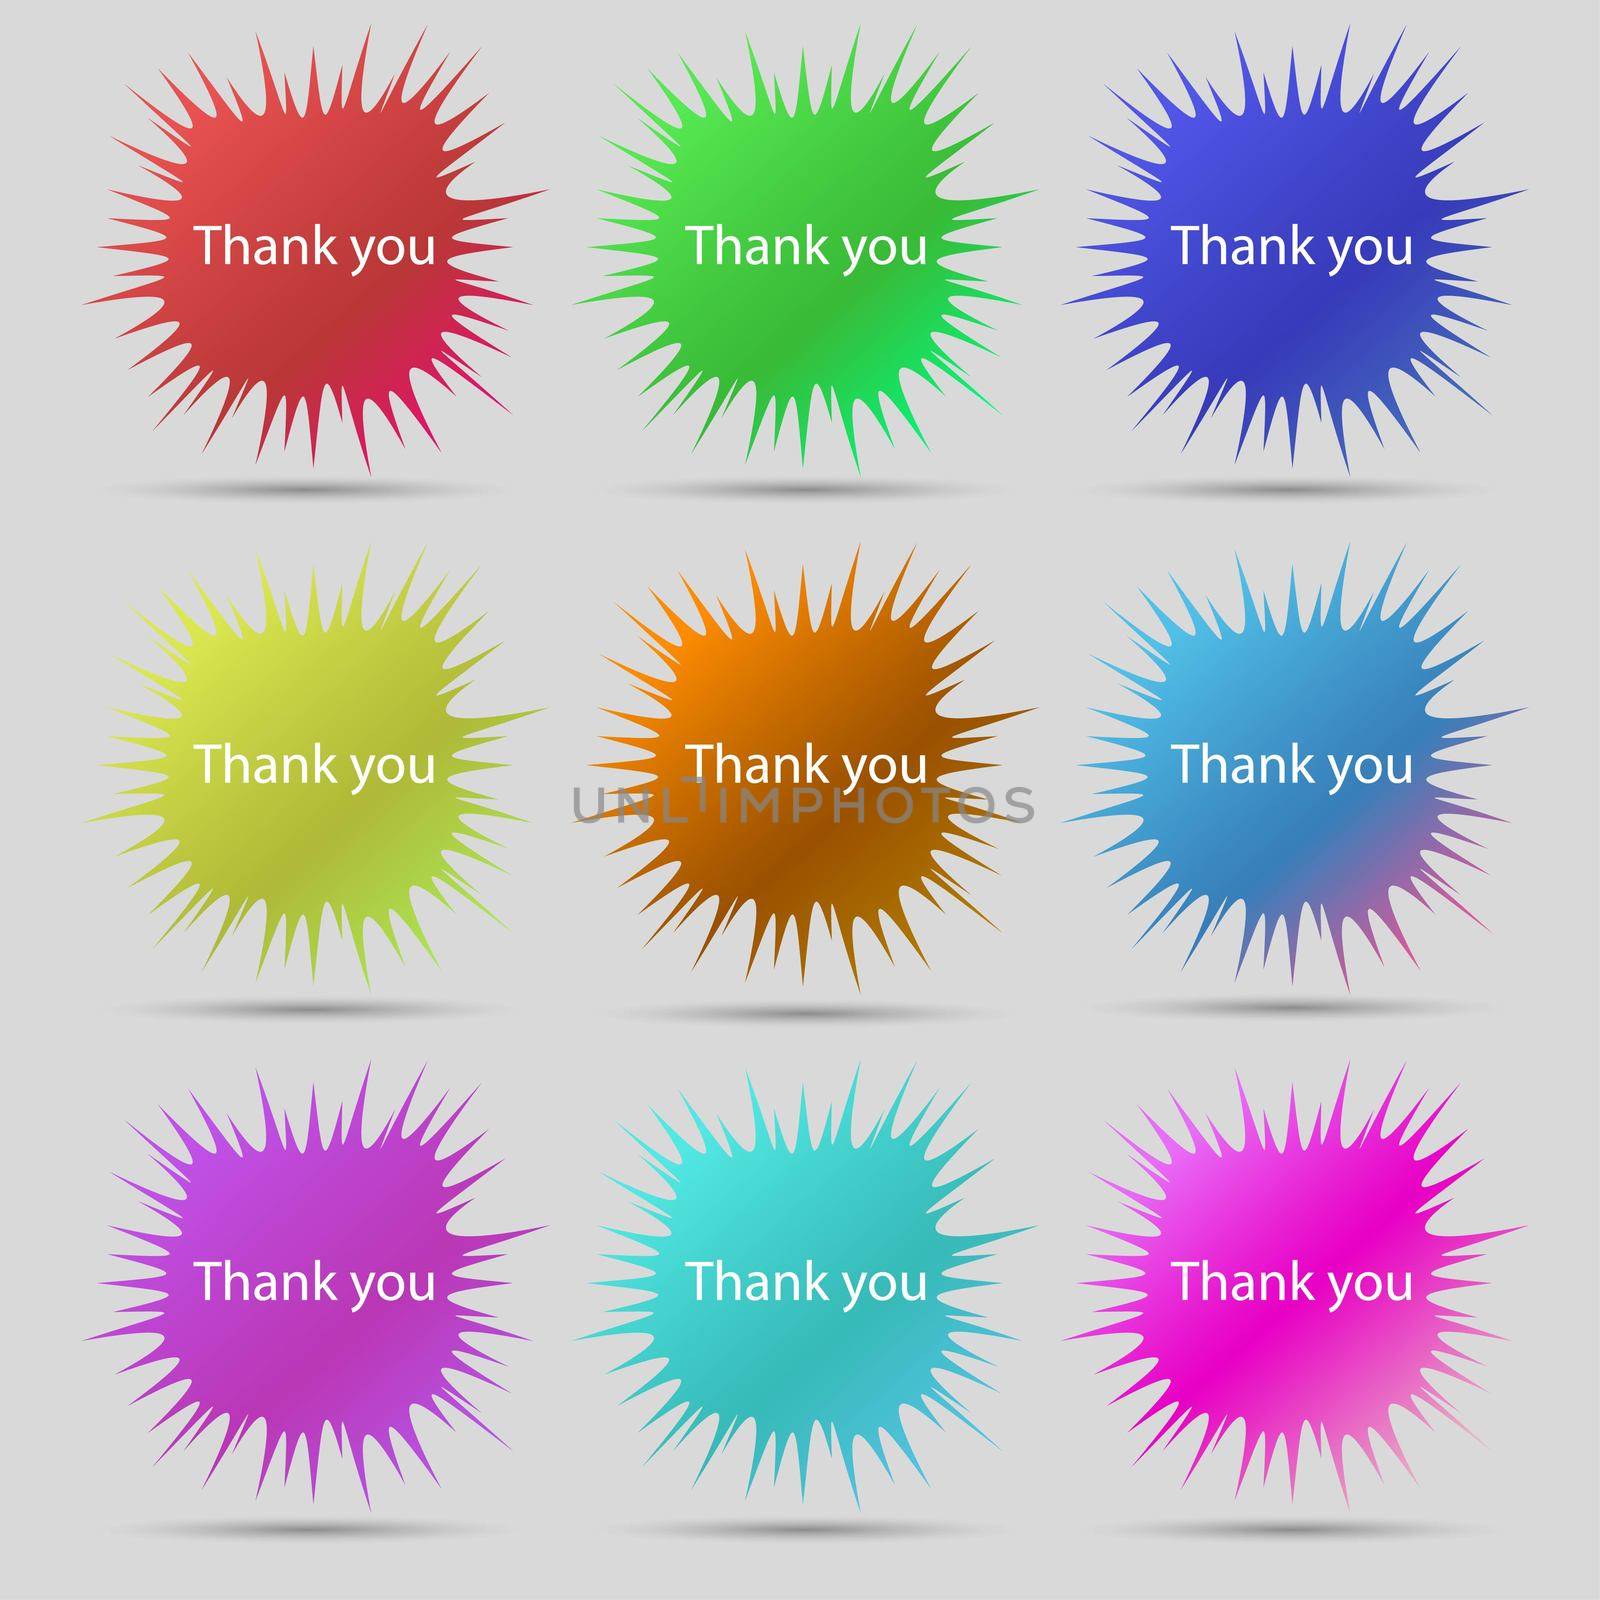 Thank you sign icon. Gratitude symbol. Nine original needle buttons. illustration. Raster version